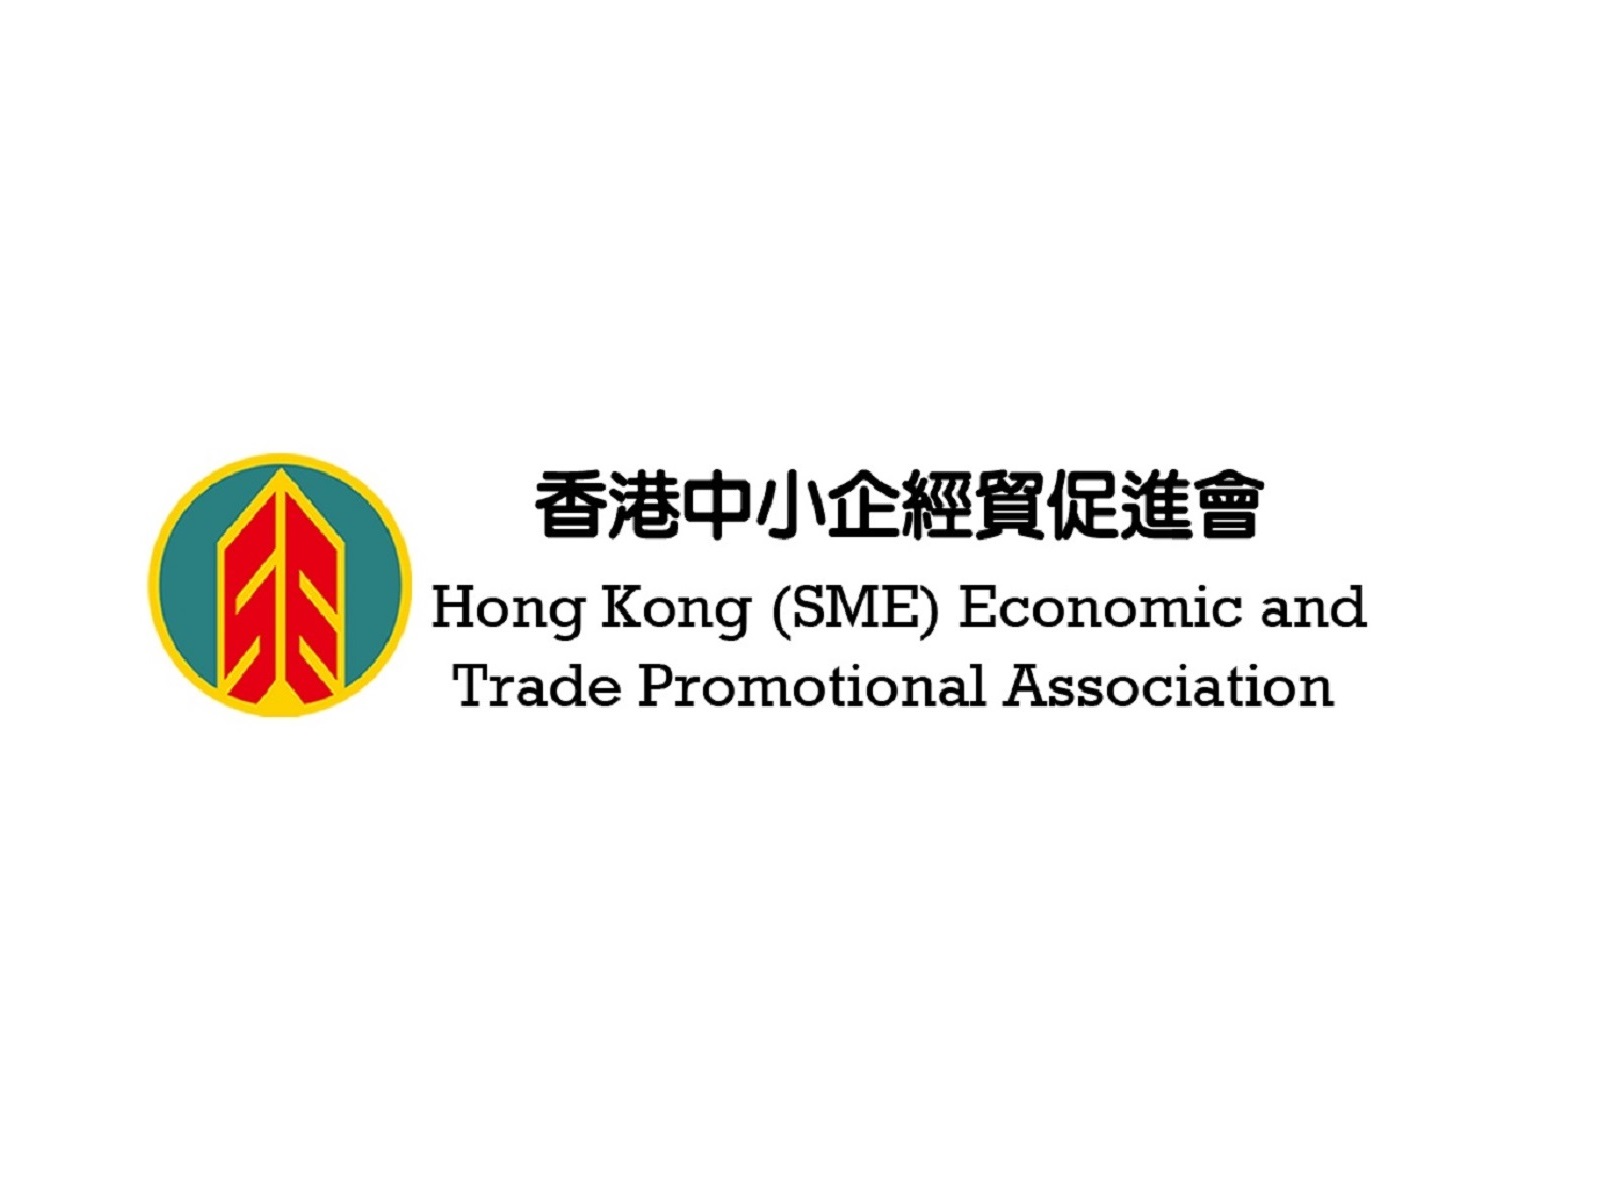 Hong Kong SME Economic and Trade Promotional Association